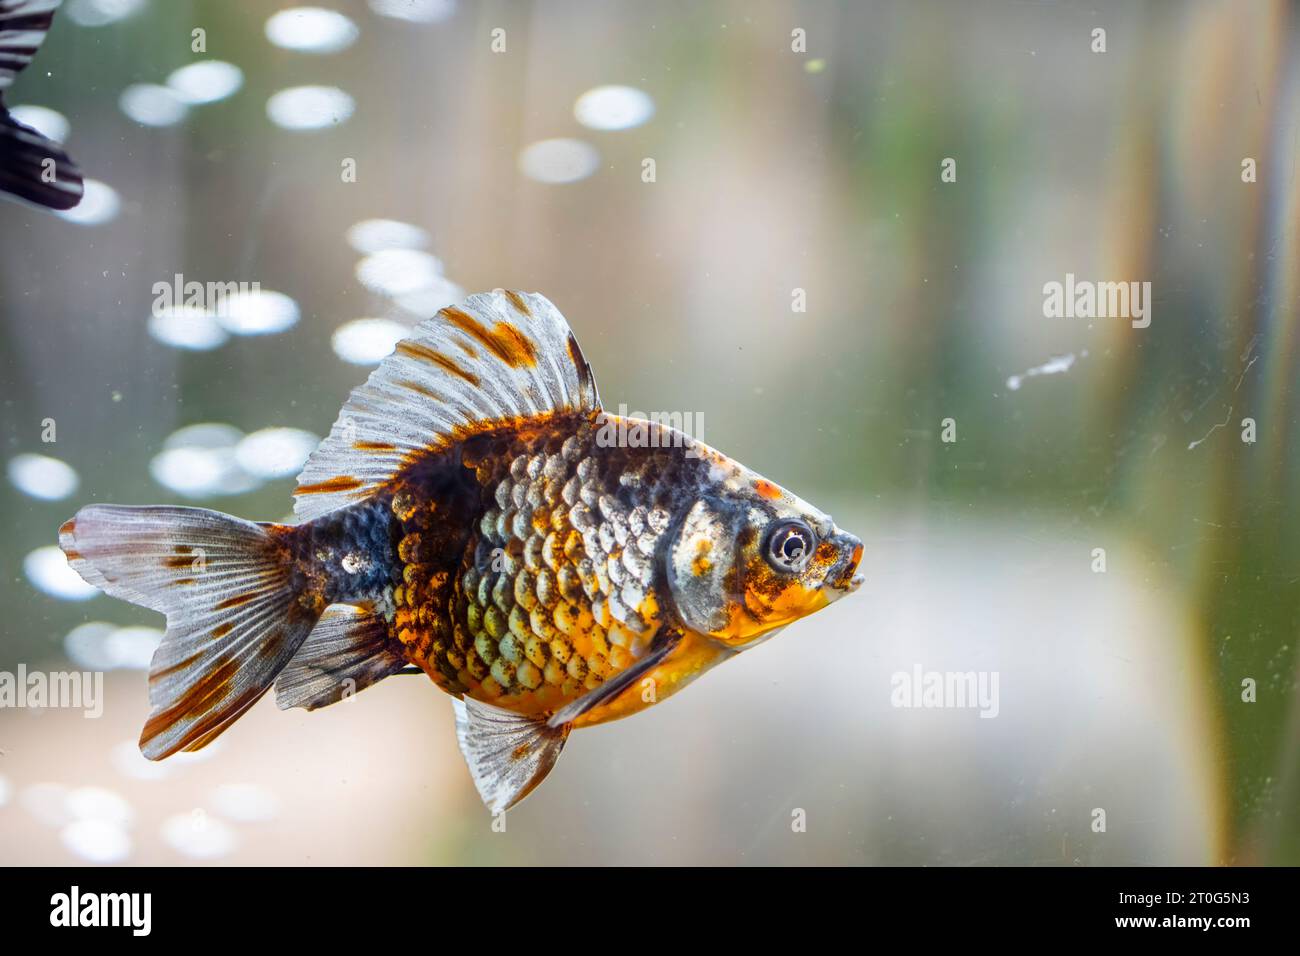 the closeup iamge of Ryukin Goldfish Assorted Colors (Carassius Auratus). Stock Photo